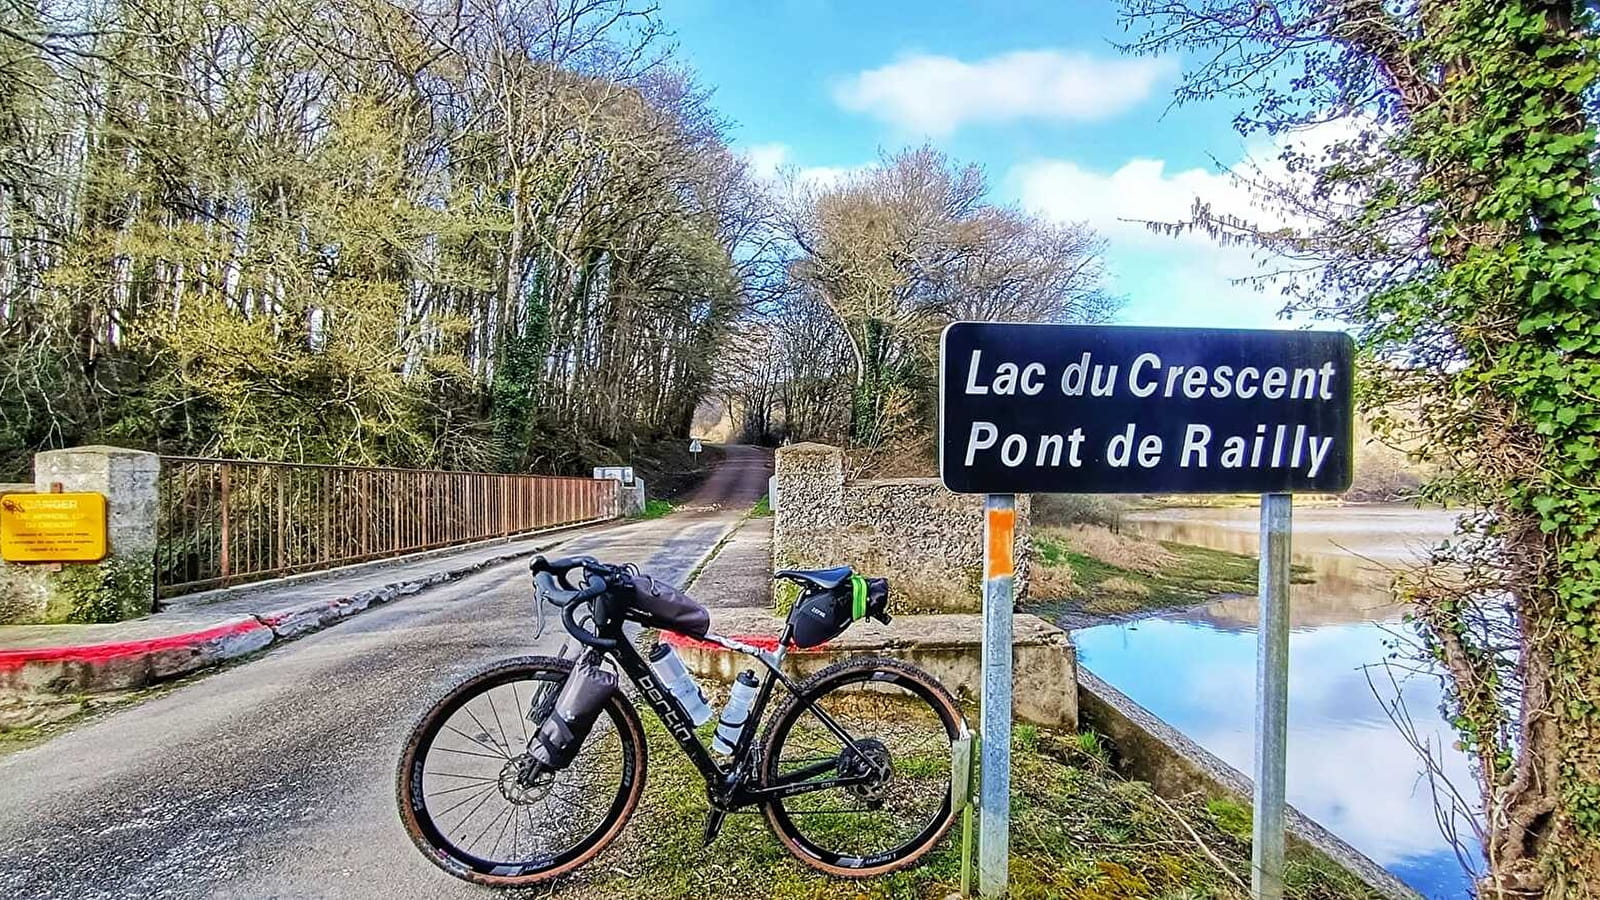 Circuit de Gravel: 265km loop from Avallon